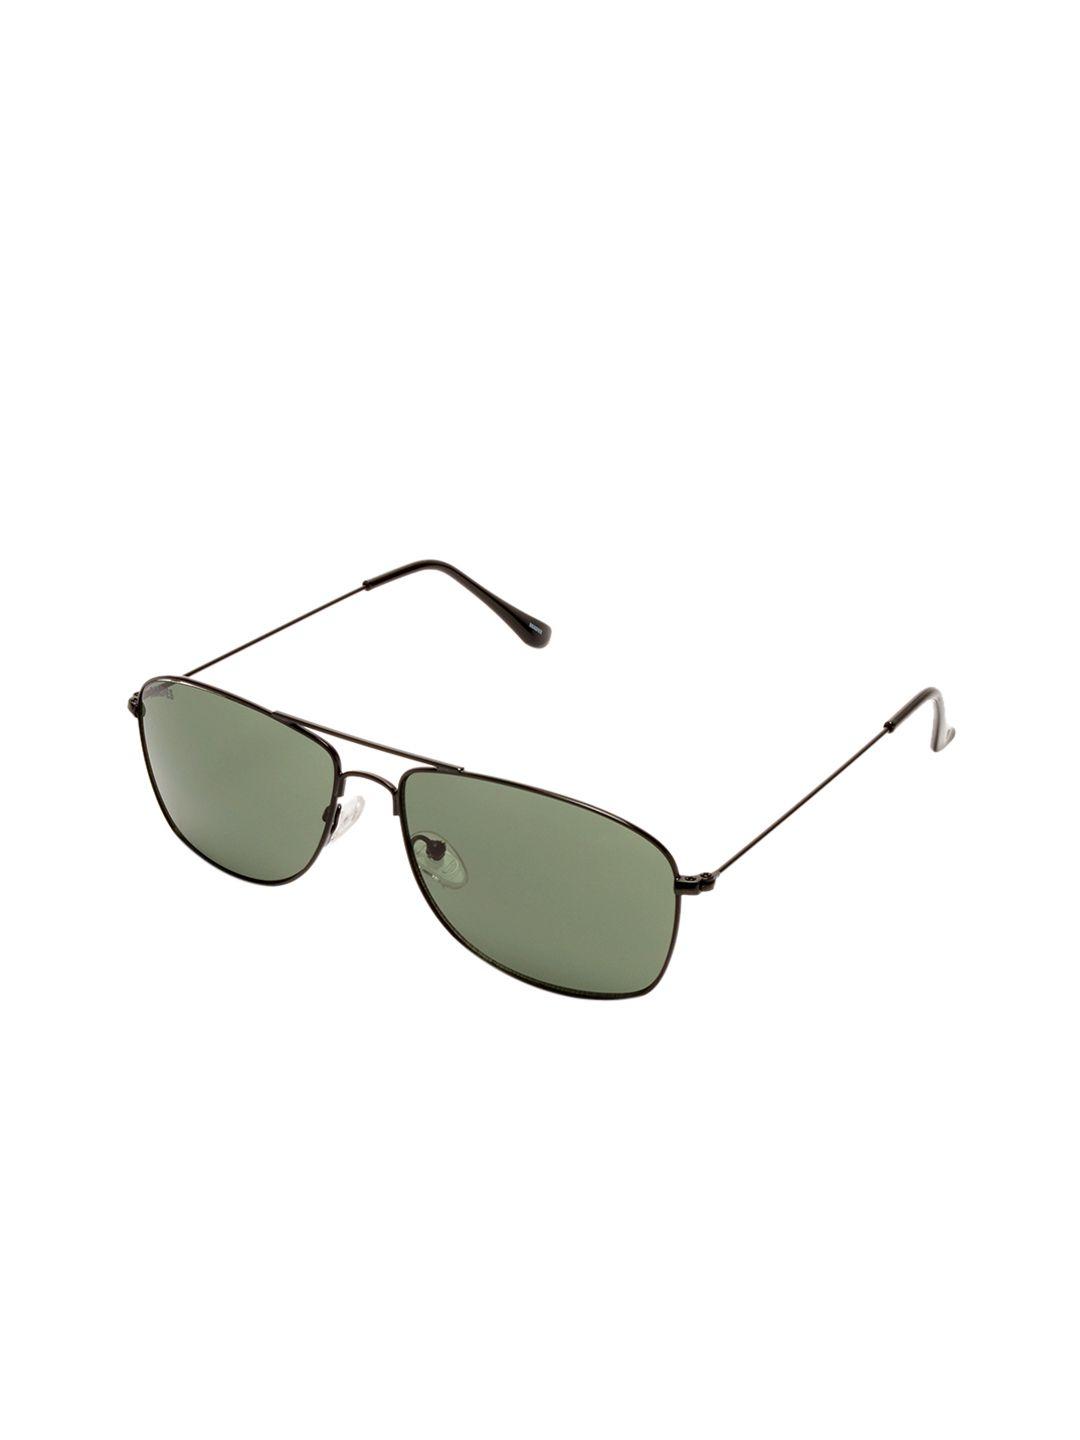 roadies unisex green lens & black rectangle sunglasses with uv protected lens